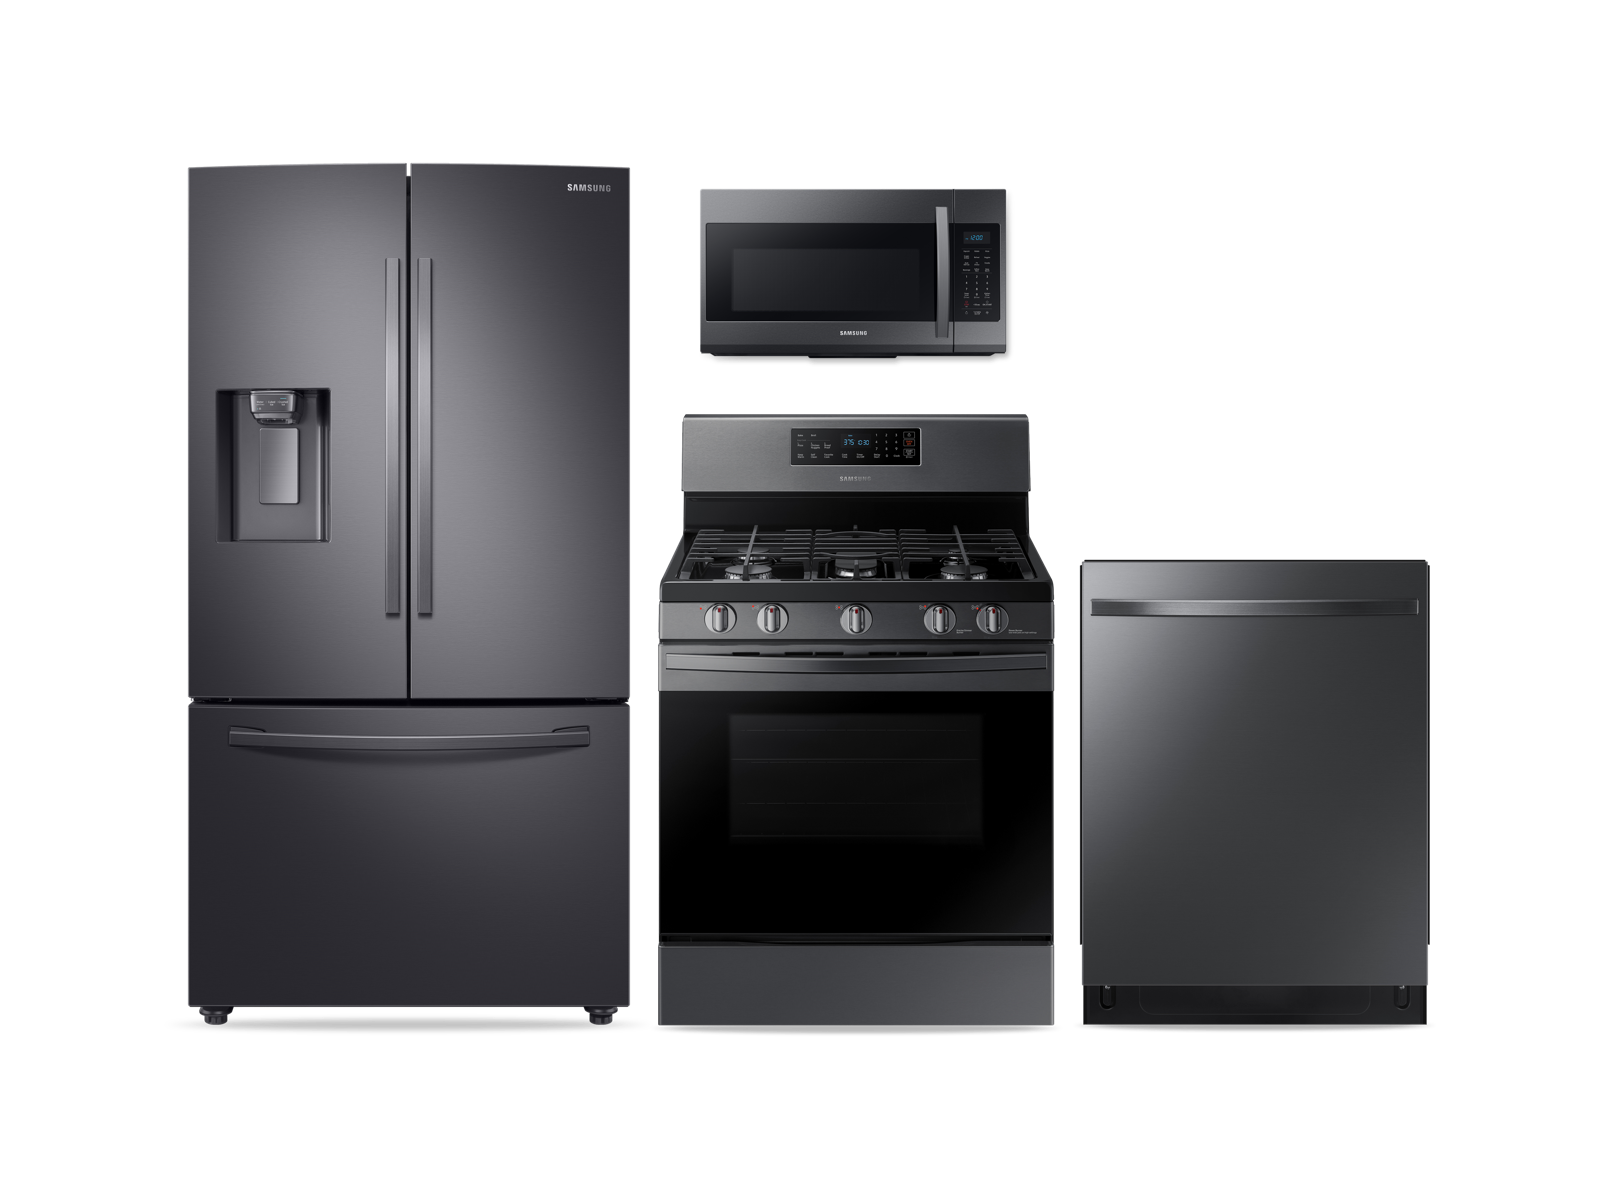 Samsung Large Capacity 3-door Refrigerator + Gas Range + StormWash Dishwasher + Microwave Kitchen Package in Black Stainless(BNDL-1646991128359)